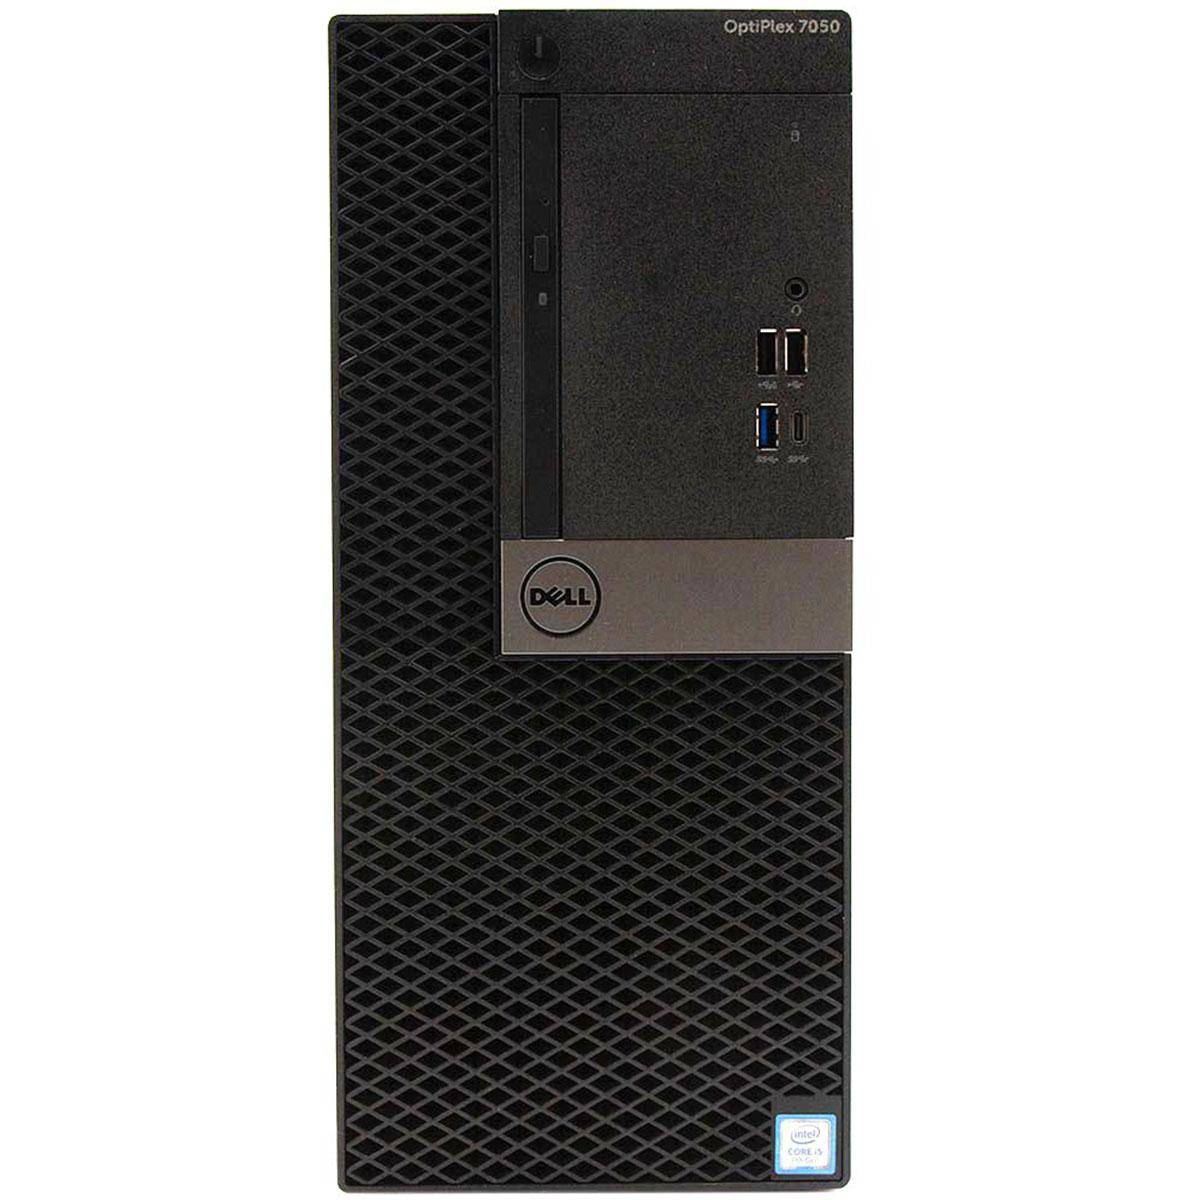  Dell OptiPlex 7050 Tower Desktop Computer, Intel Core